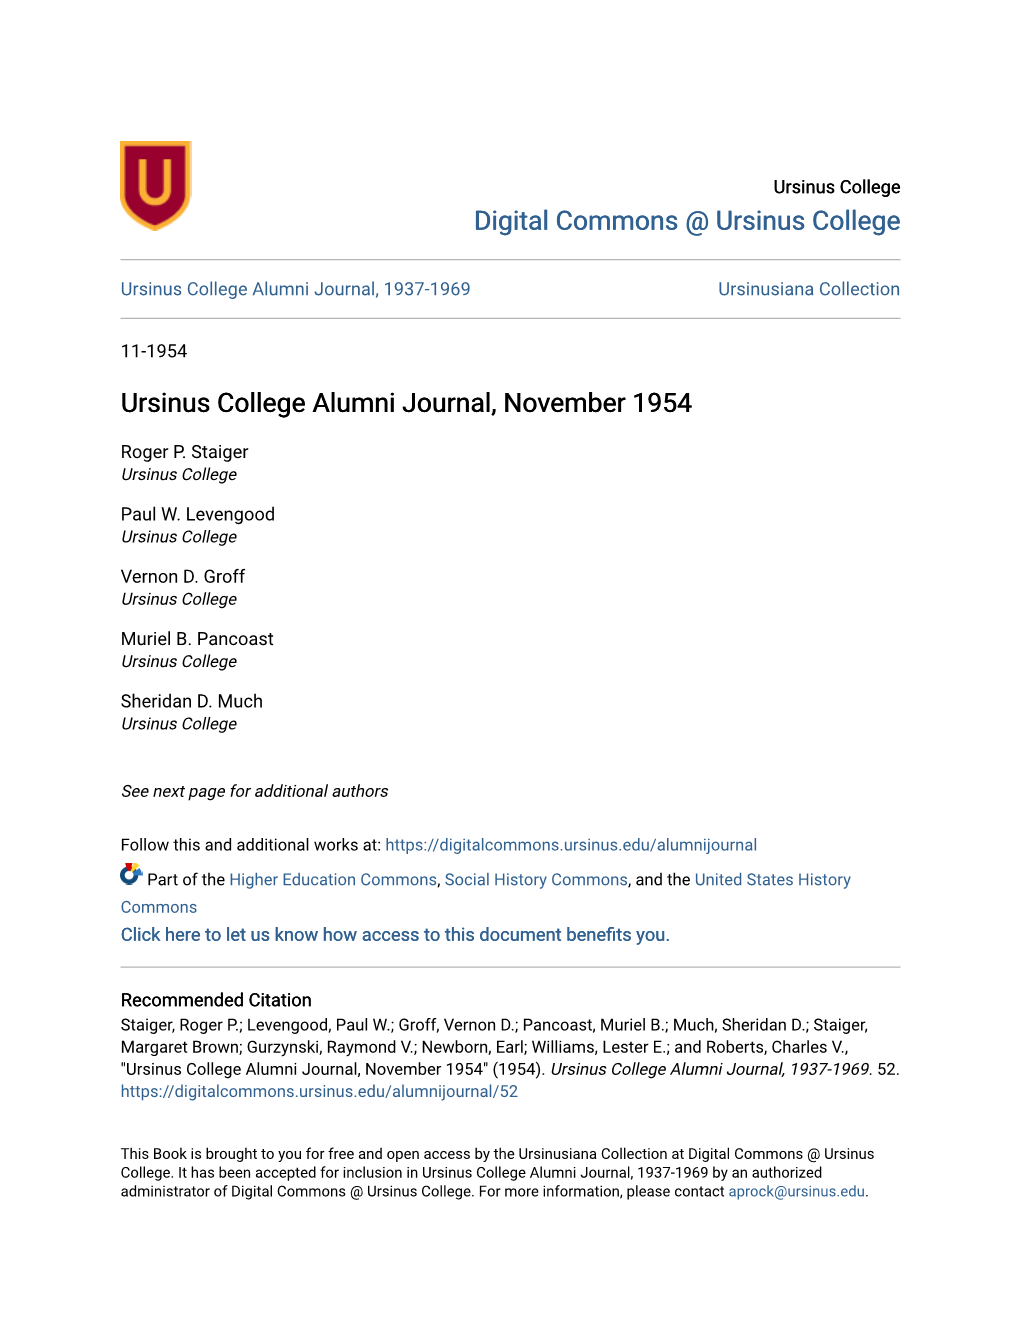 Ursinus College Alumni Journal, November 1954